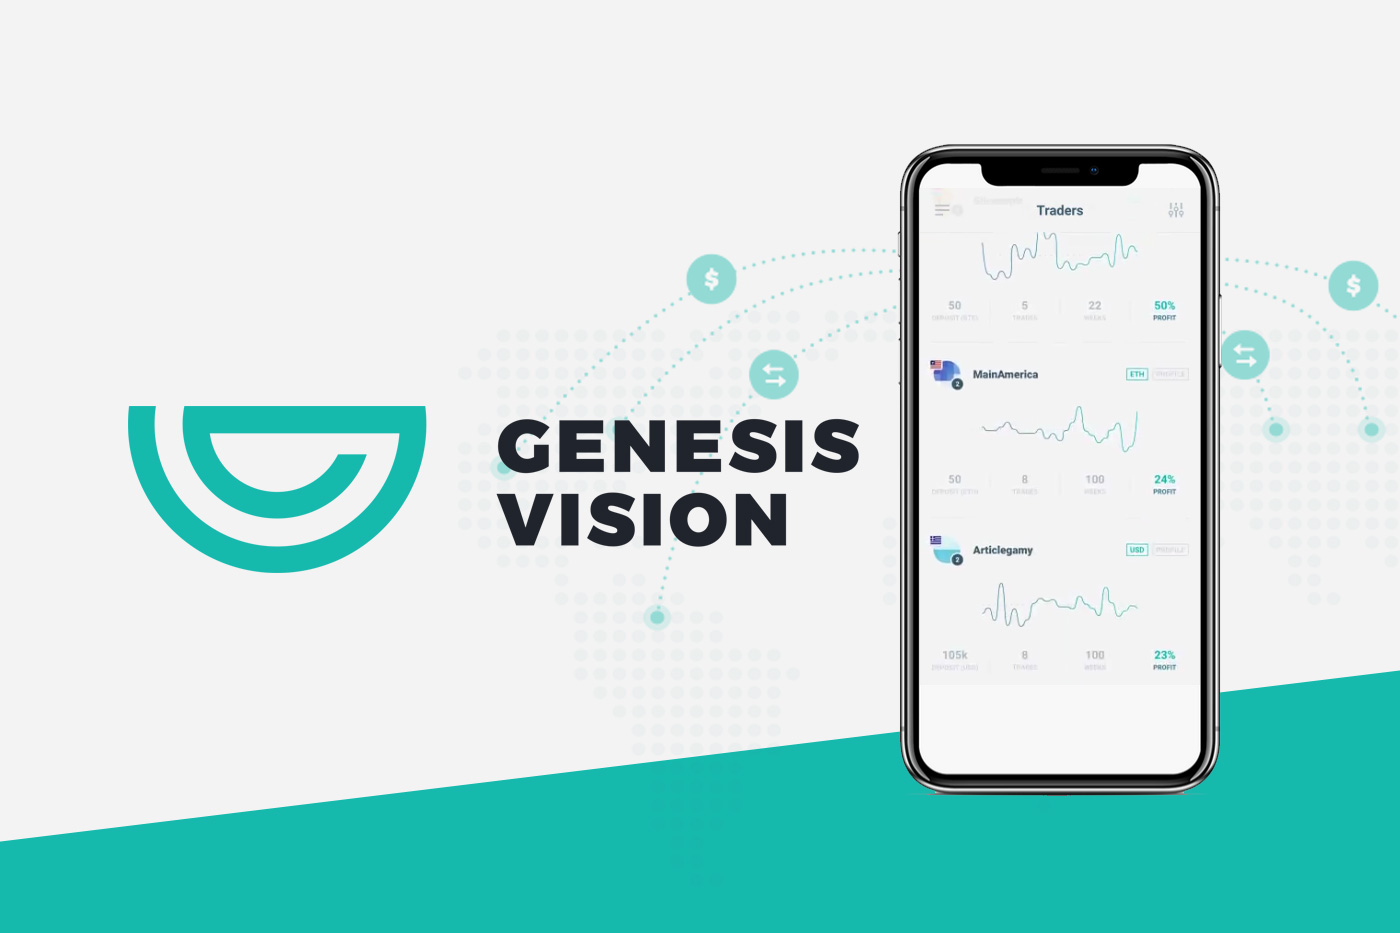 Genesis Vision Review Guide